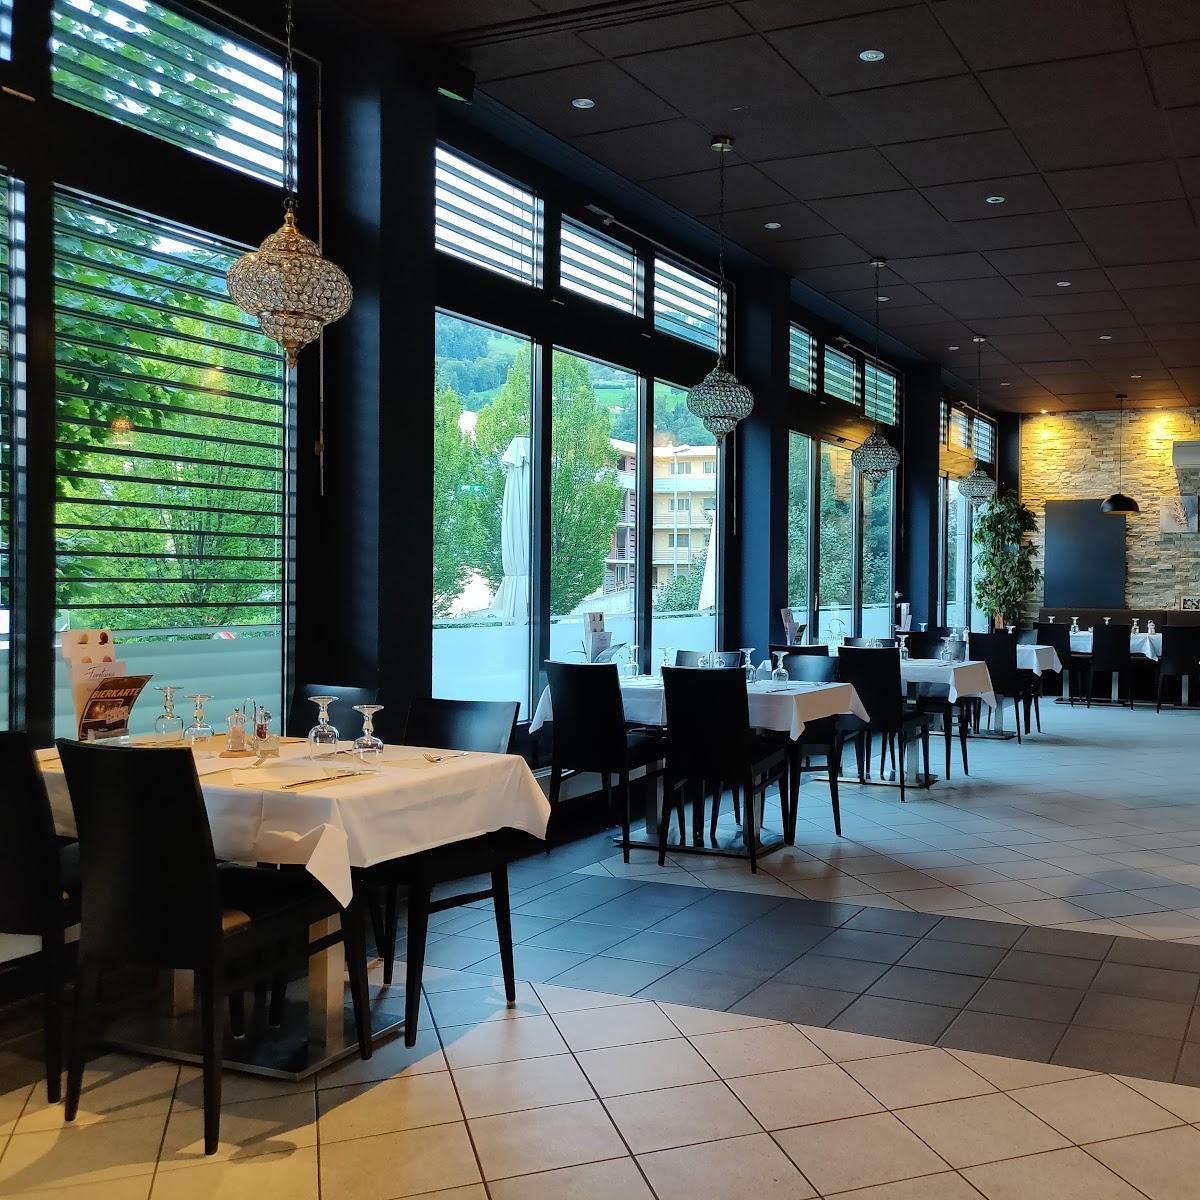 Restaurant "Fontana Restaurant & Bar" in Kriens